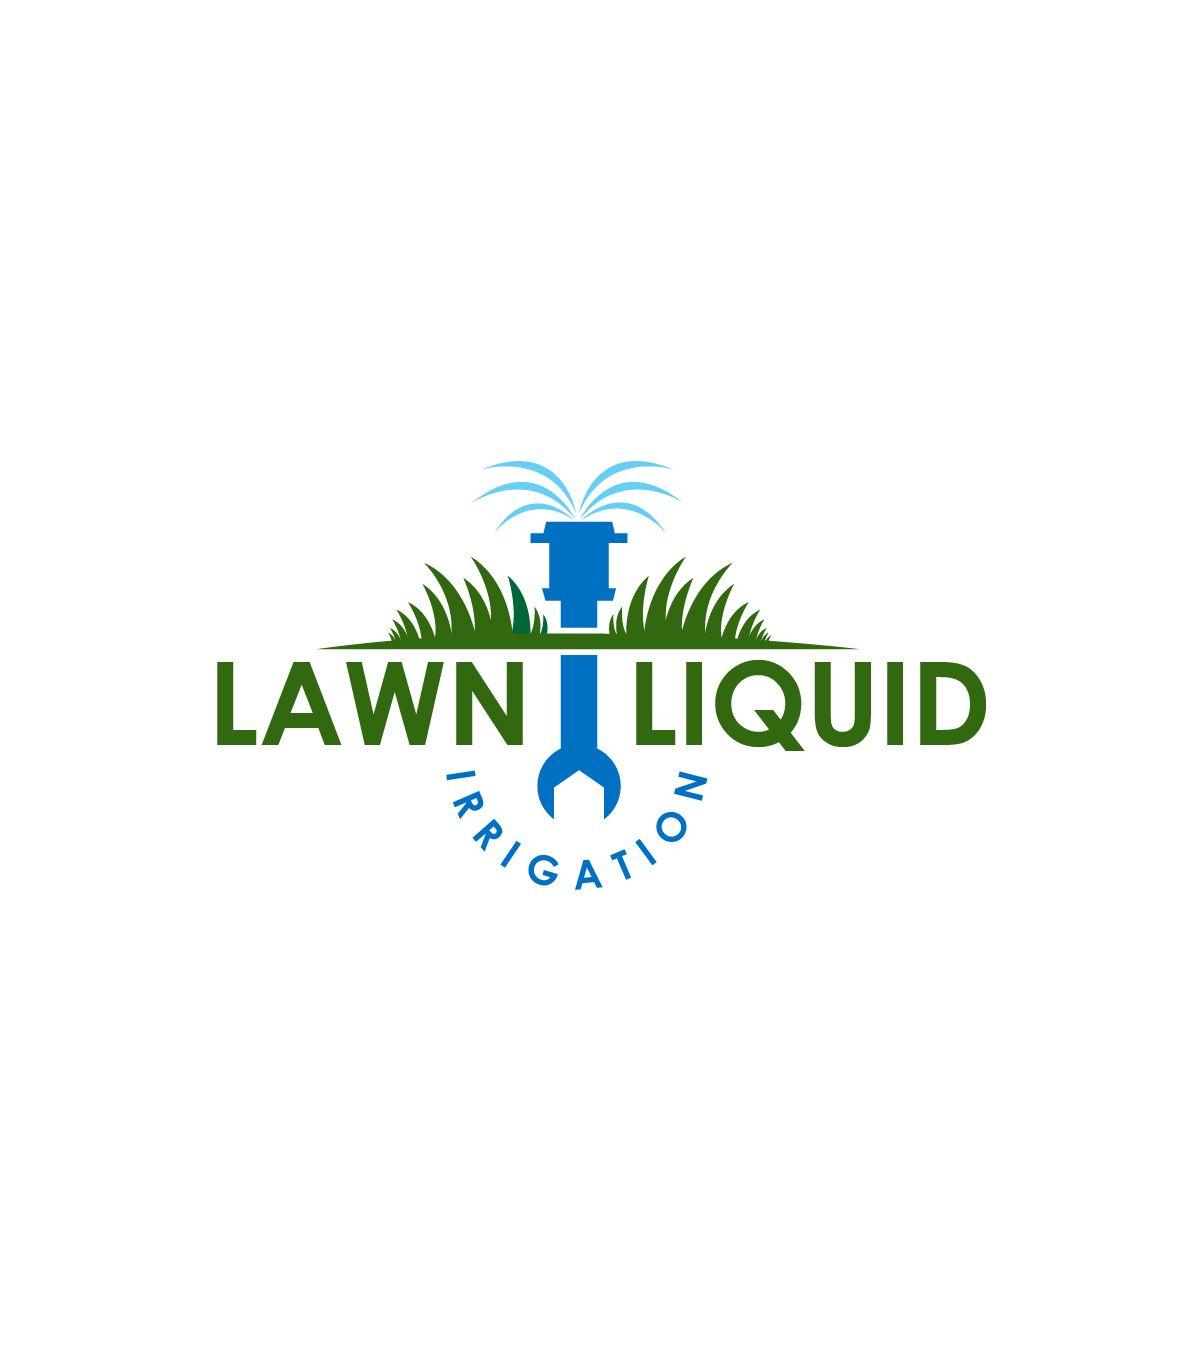 Irrigation Logo - Bold, Masculine, Construction Logo Design for Lawn Liquid Irrigation ...